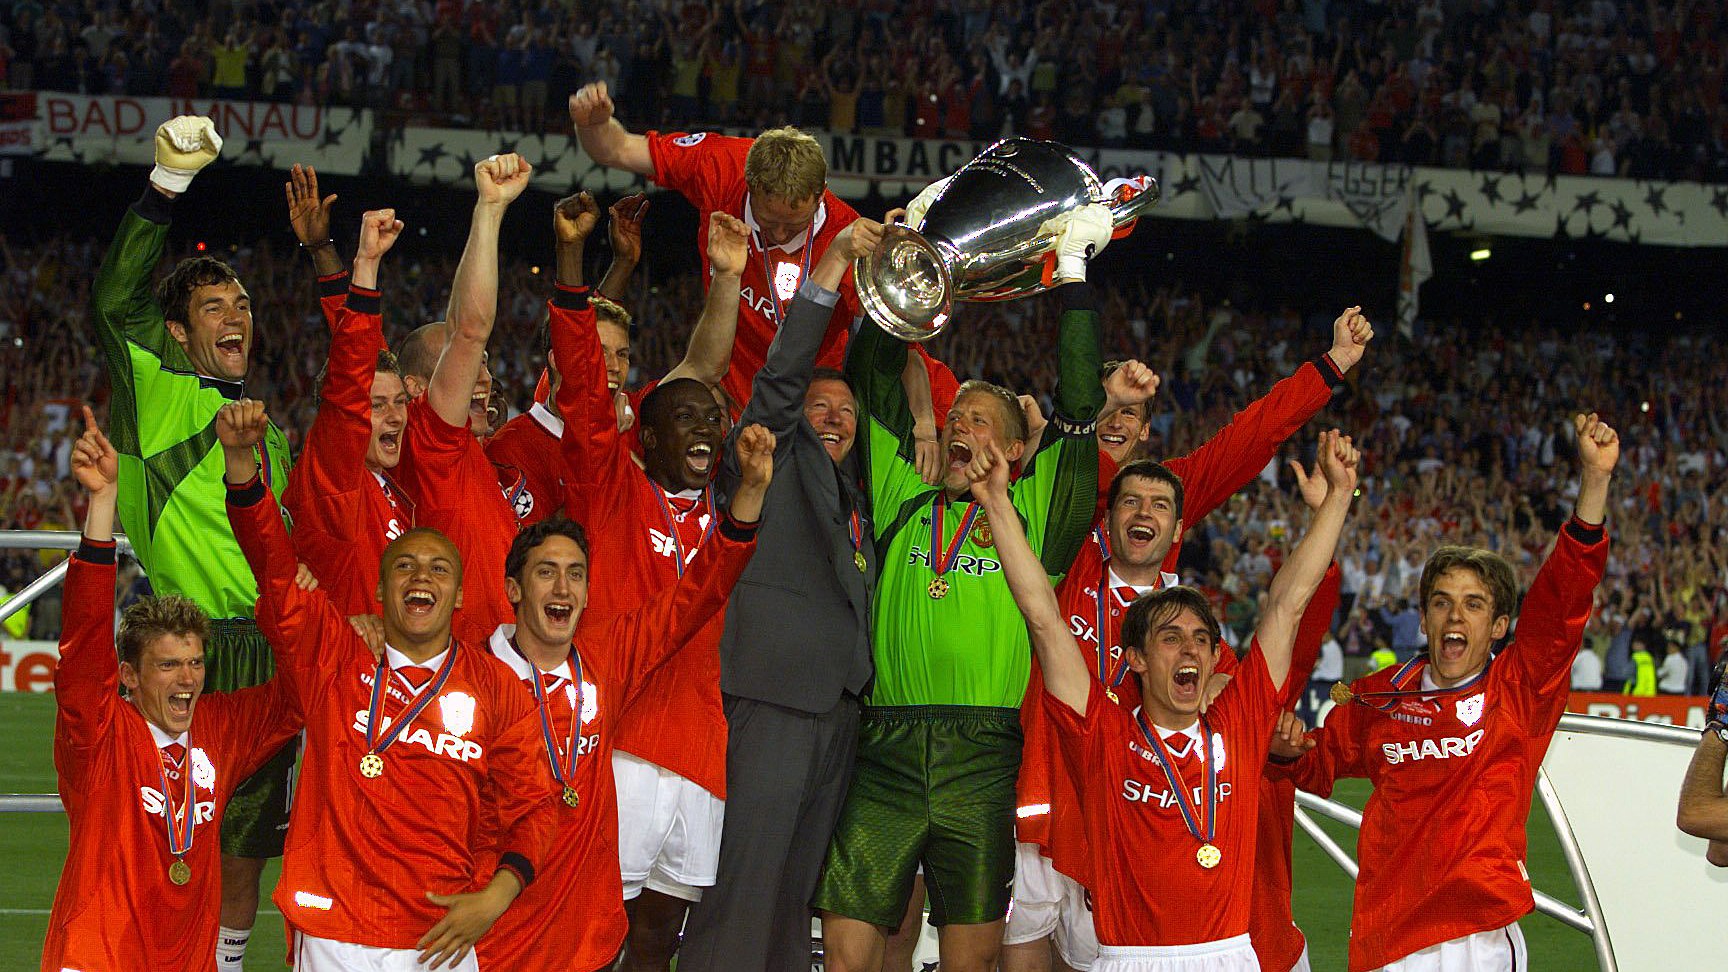 99 follows Manchester United’s treble-winning season of 1998-99